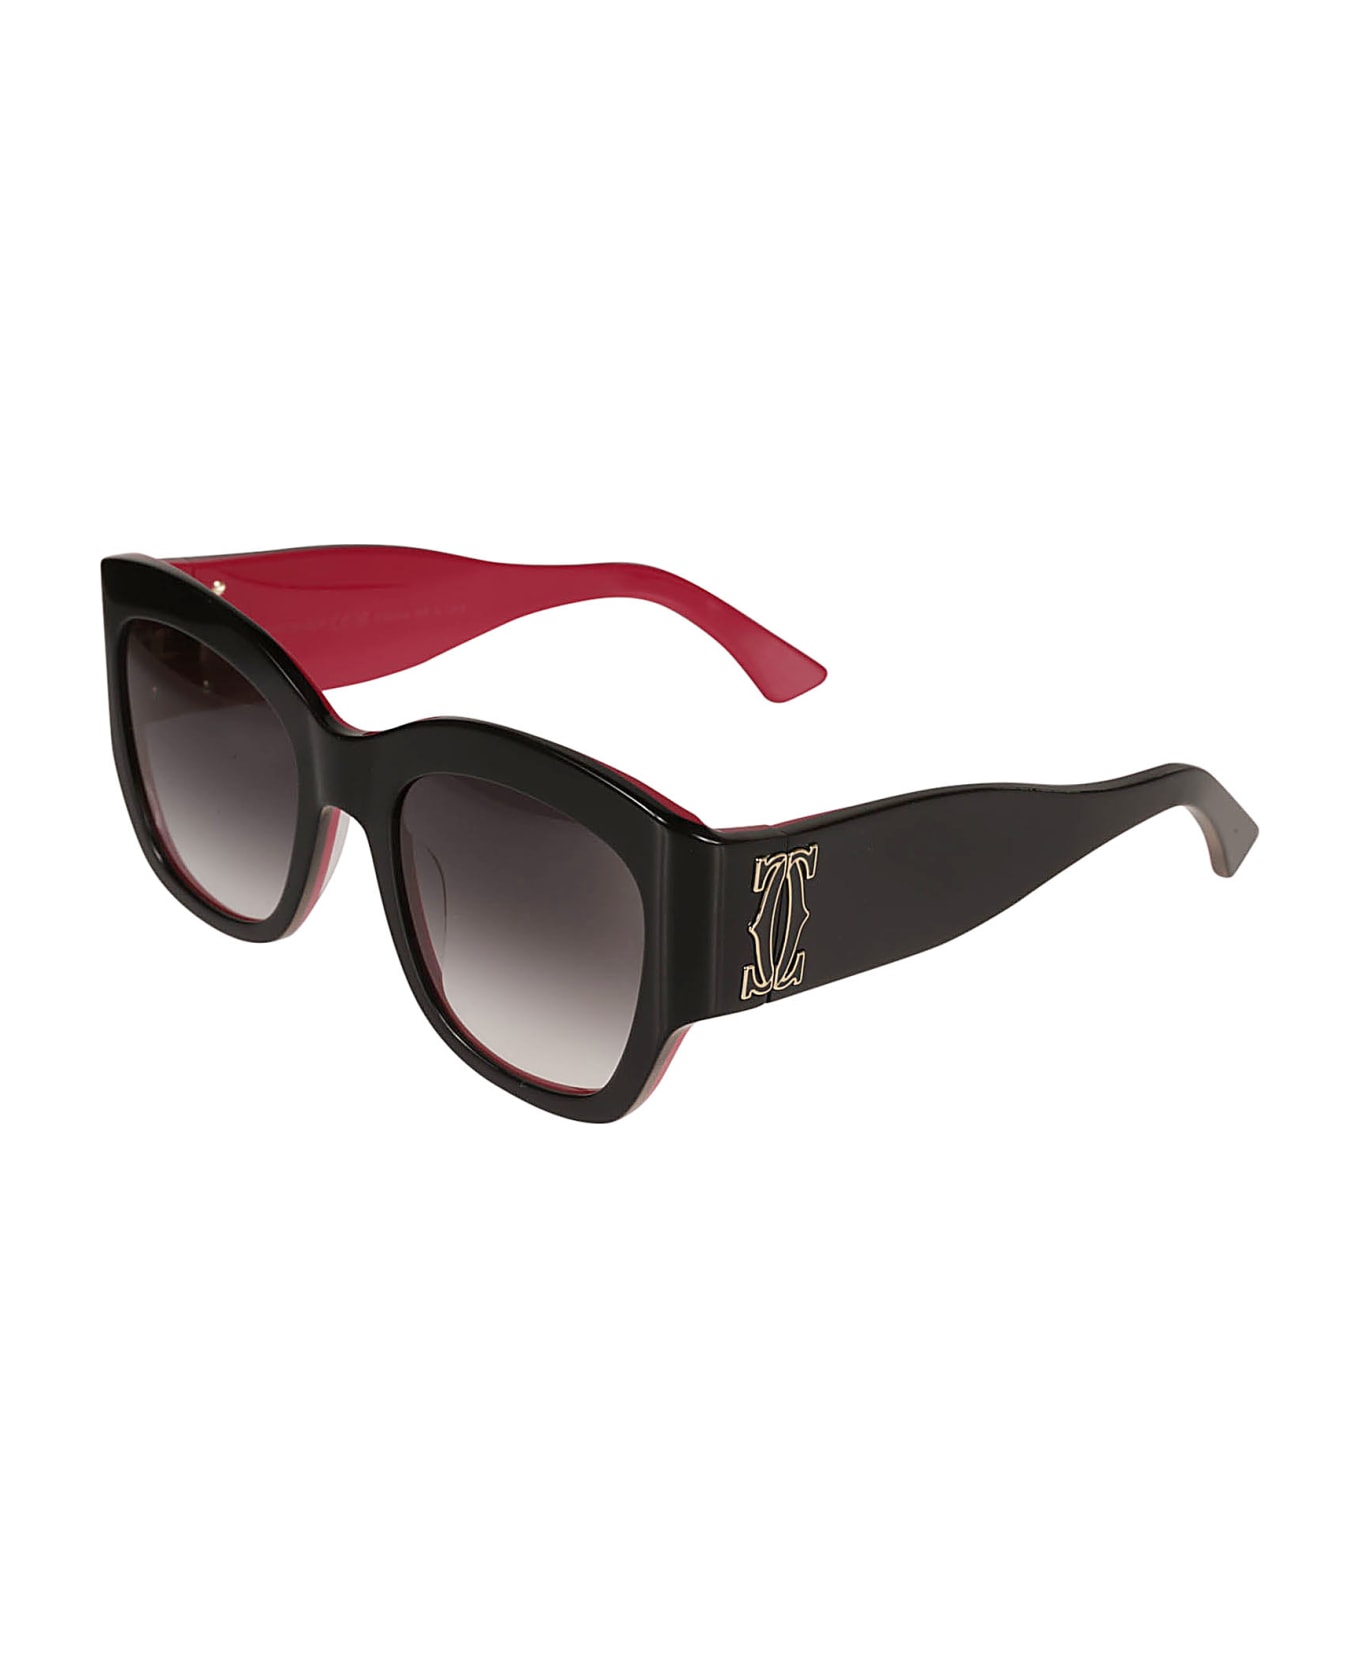 Cartier Eyewear Curved Square Sunglasses - Black